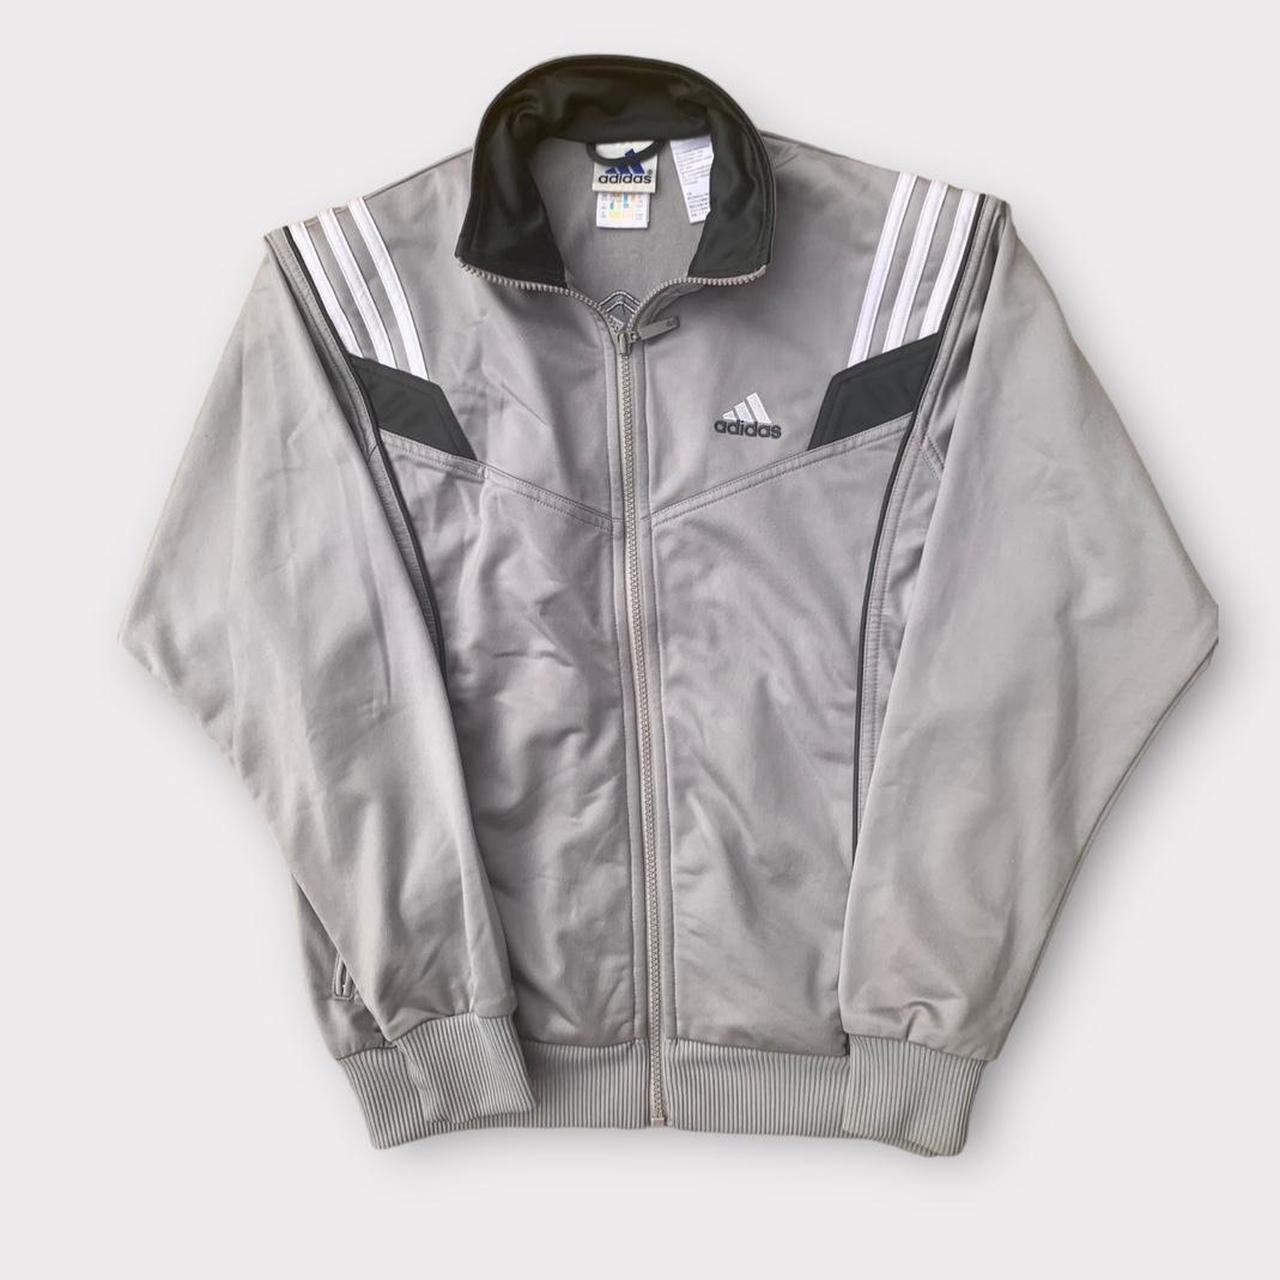 Adidas vintage retro zip up jacket. Size L. Can fit... - Depop